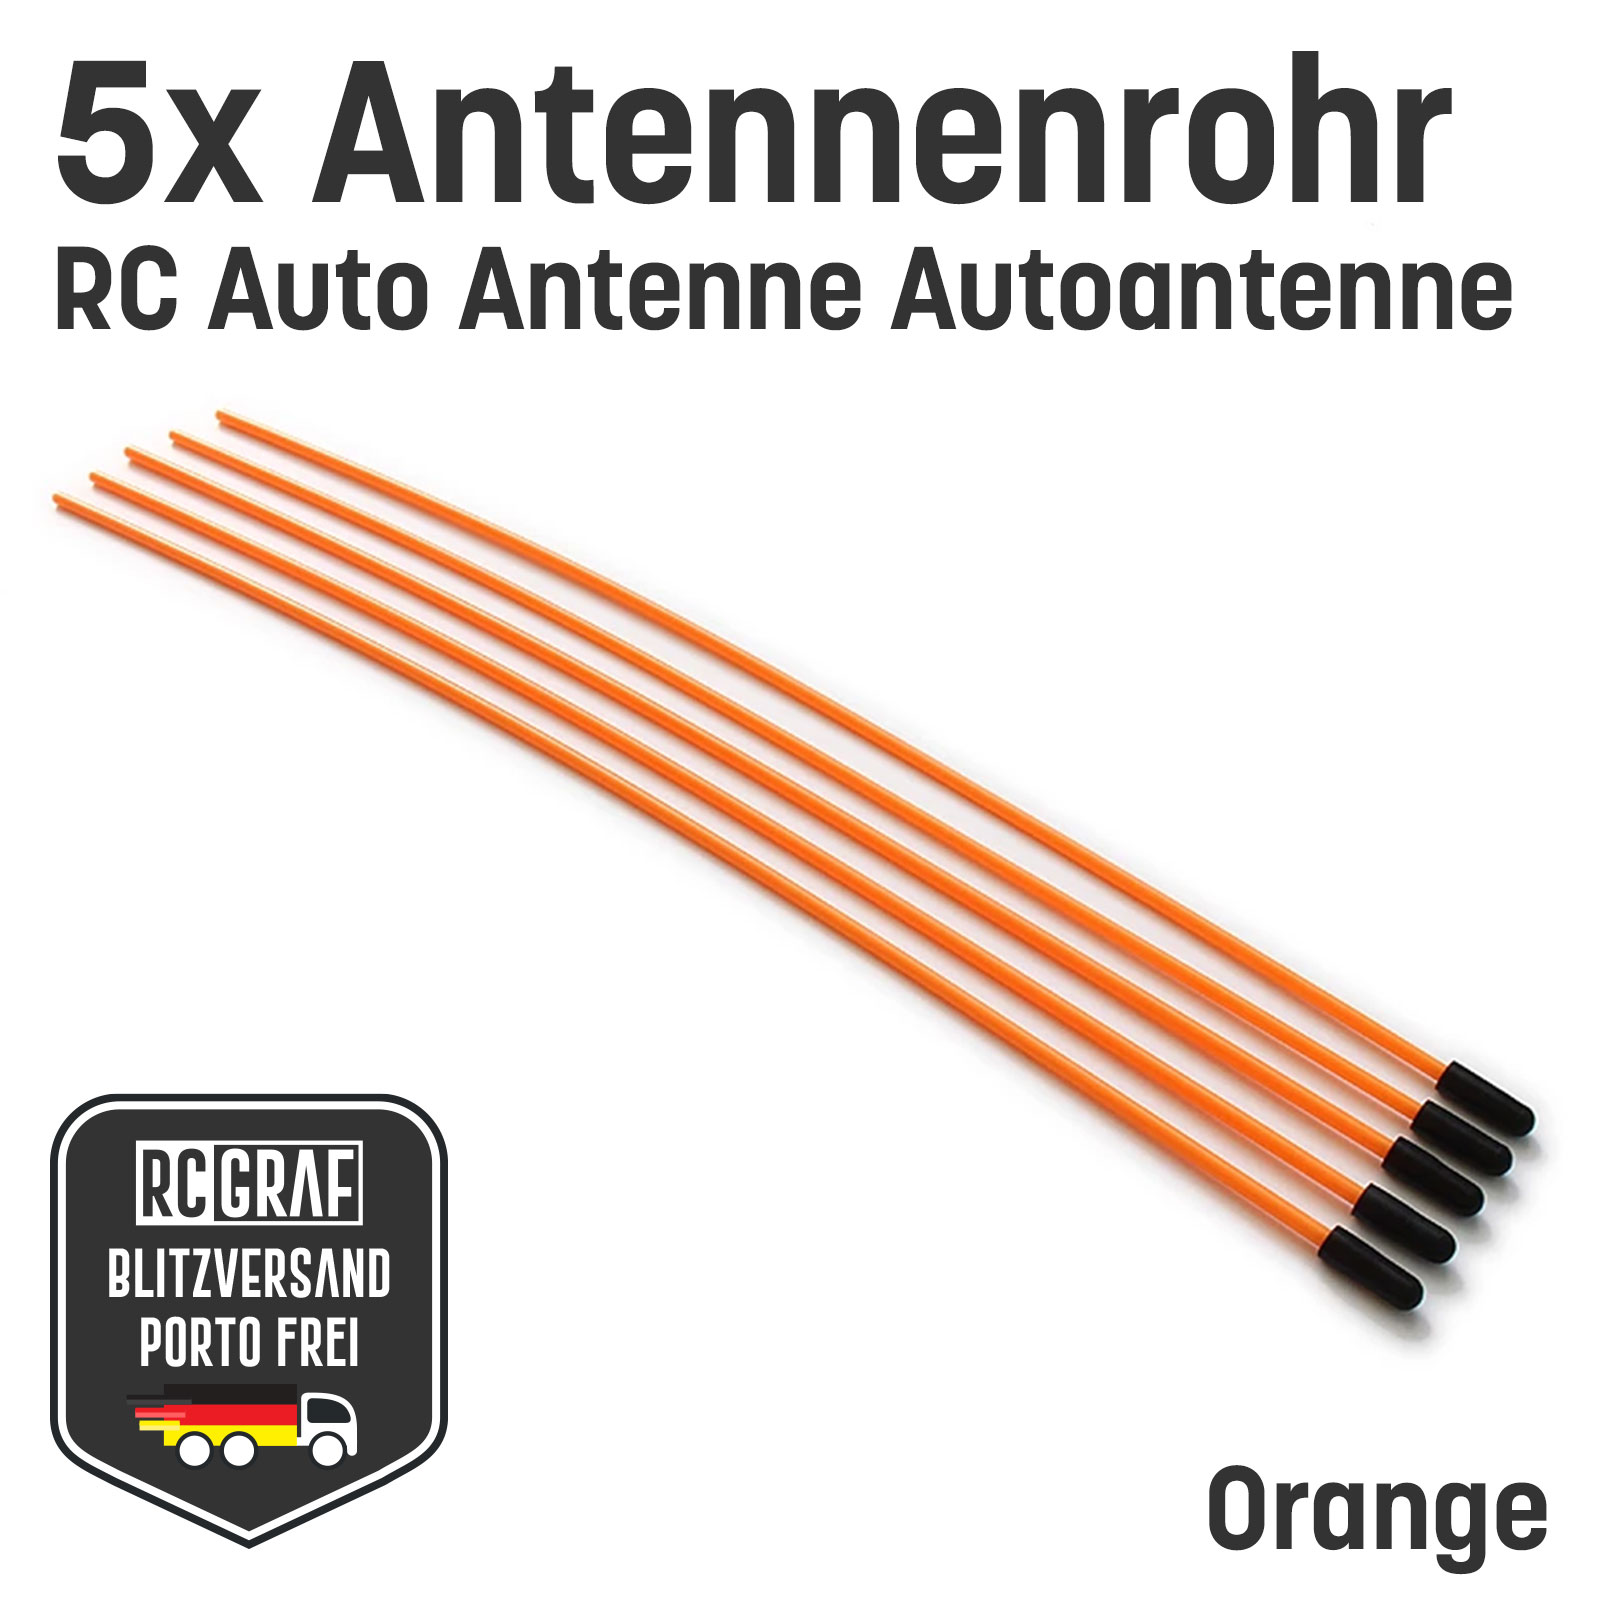 5x RC Antennenrohr Orange